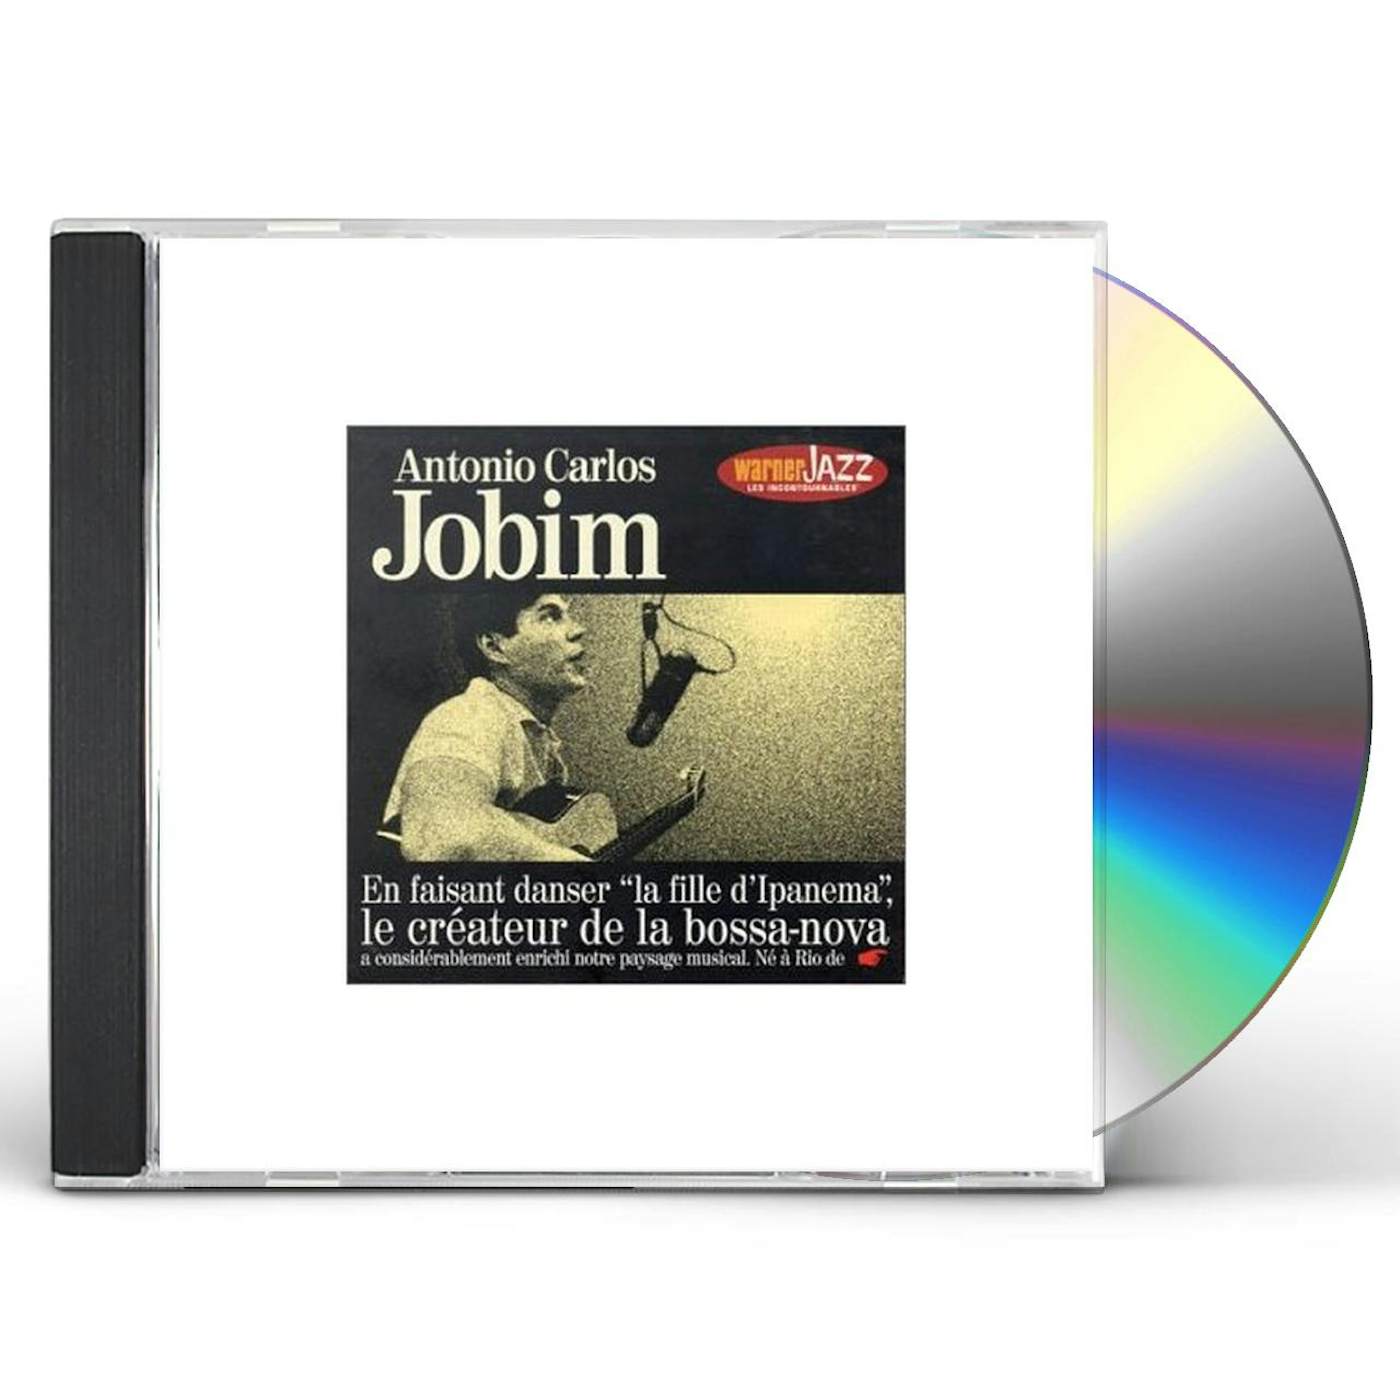 Antônio Carlos Jobim INCONTOURNABLES CD